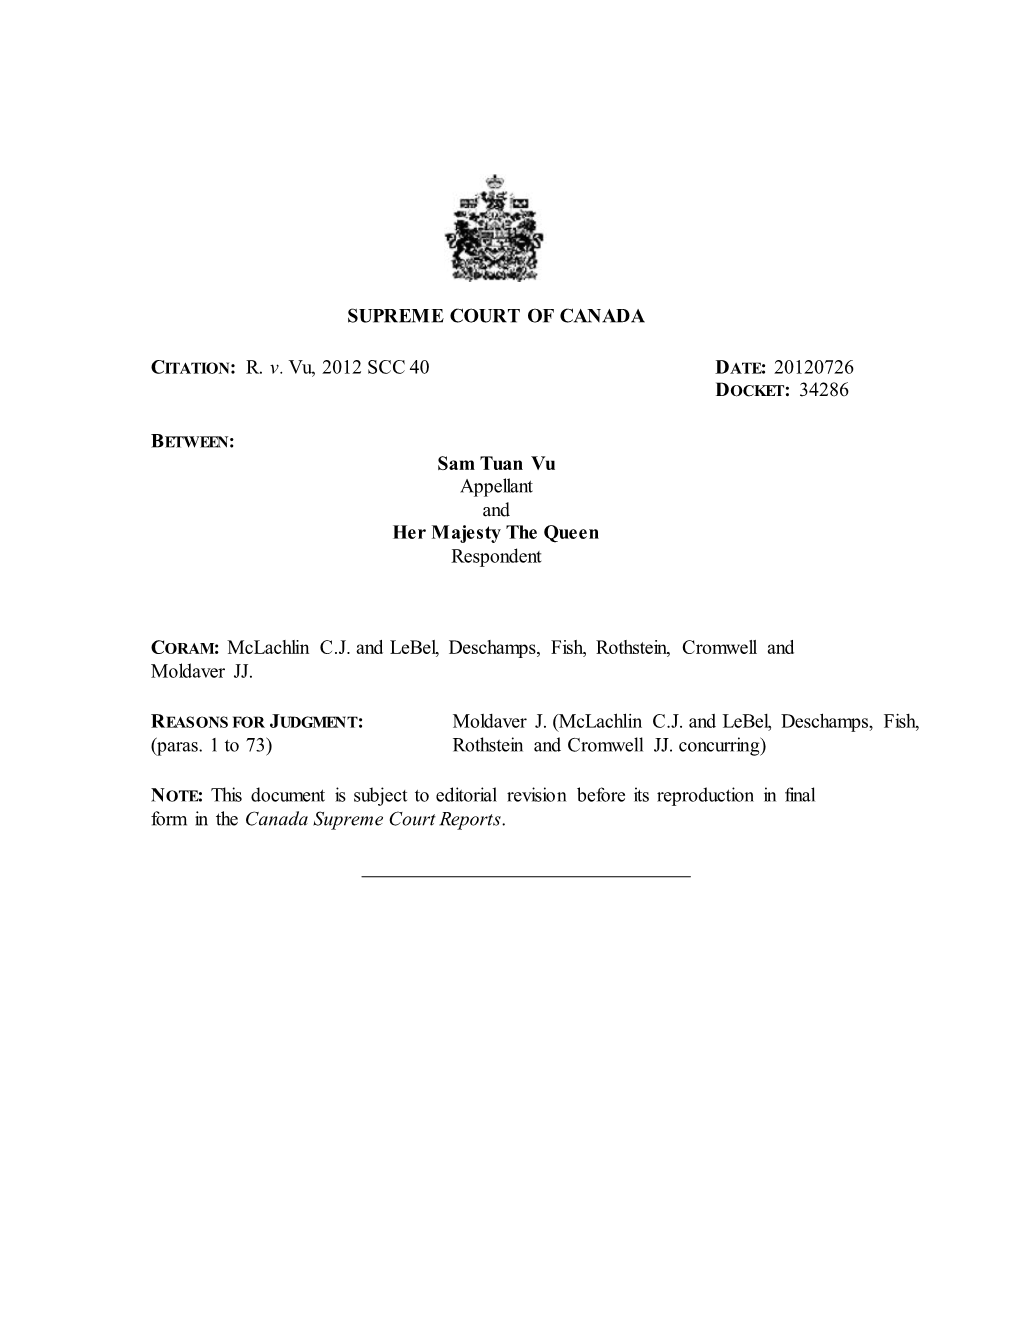 SUPREME COURT of CANADA CITATION: R. V. Vu, 2012 SCC 40 DATE